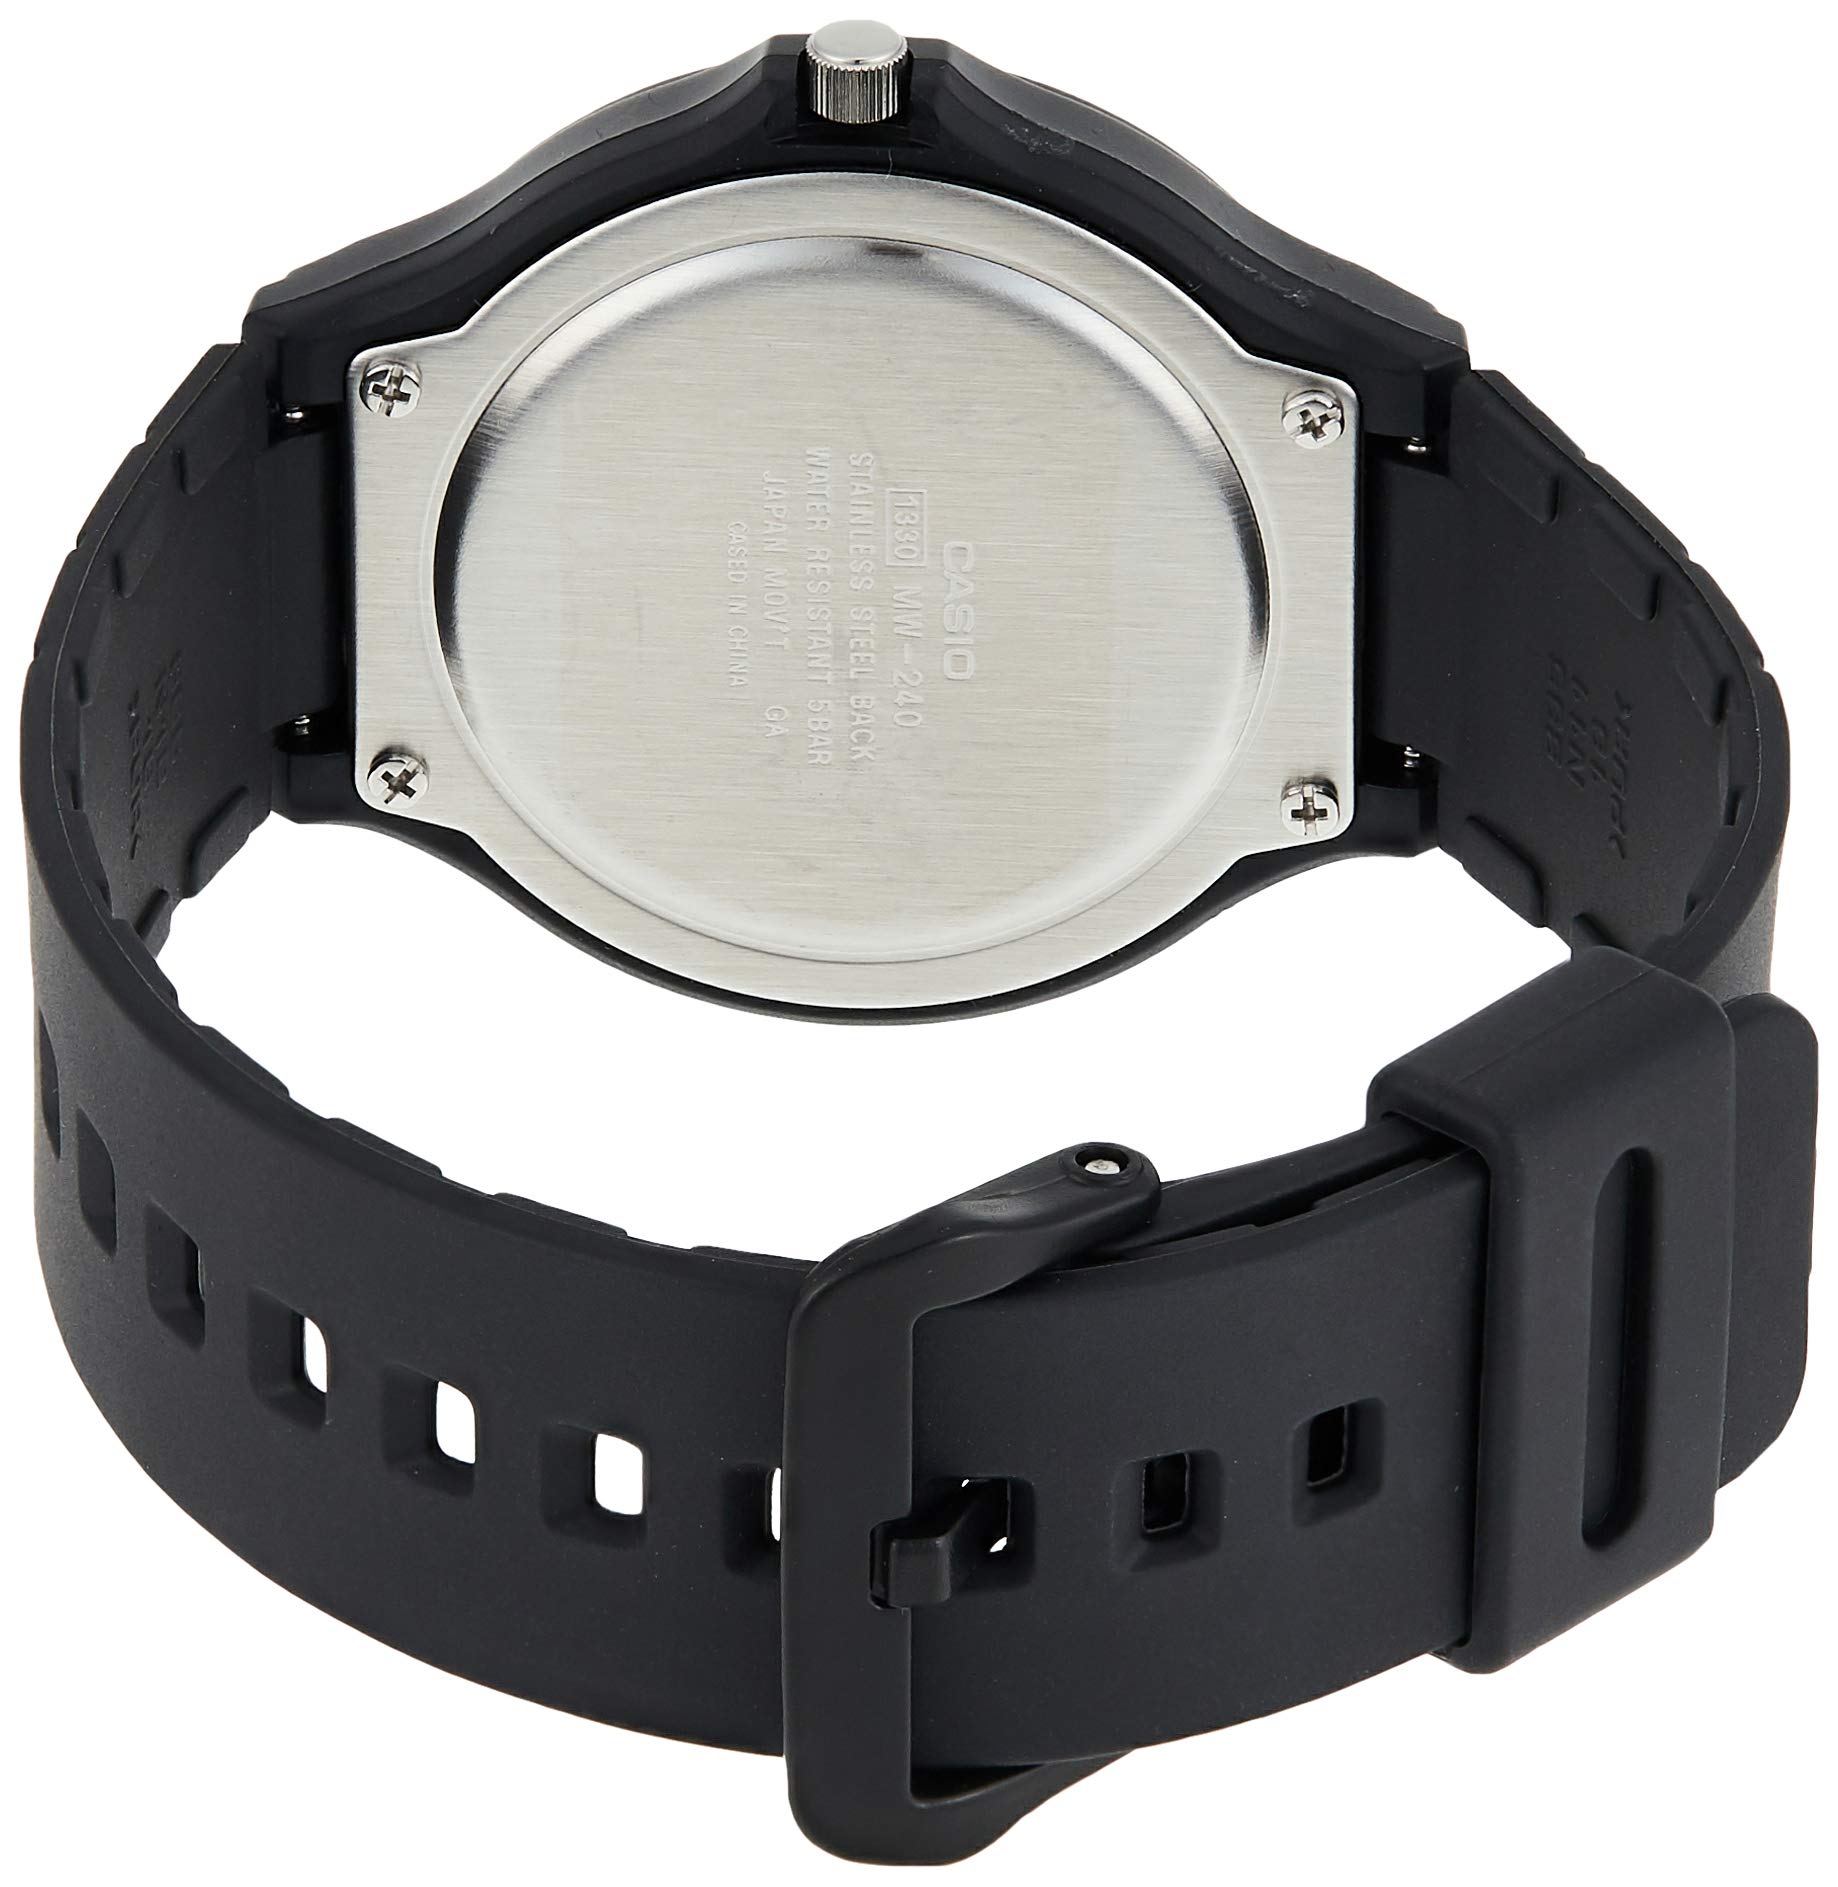 Casio Mw-240-4B Watch with Japanese Quartz Movement